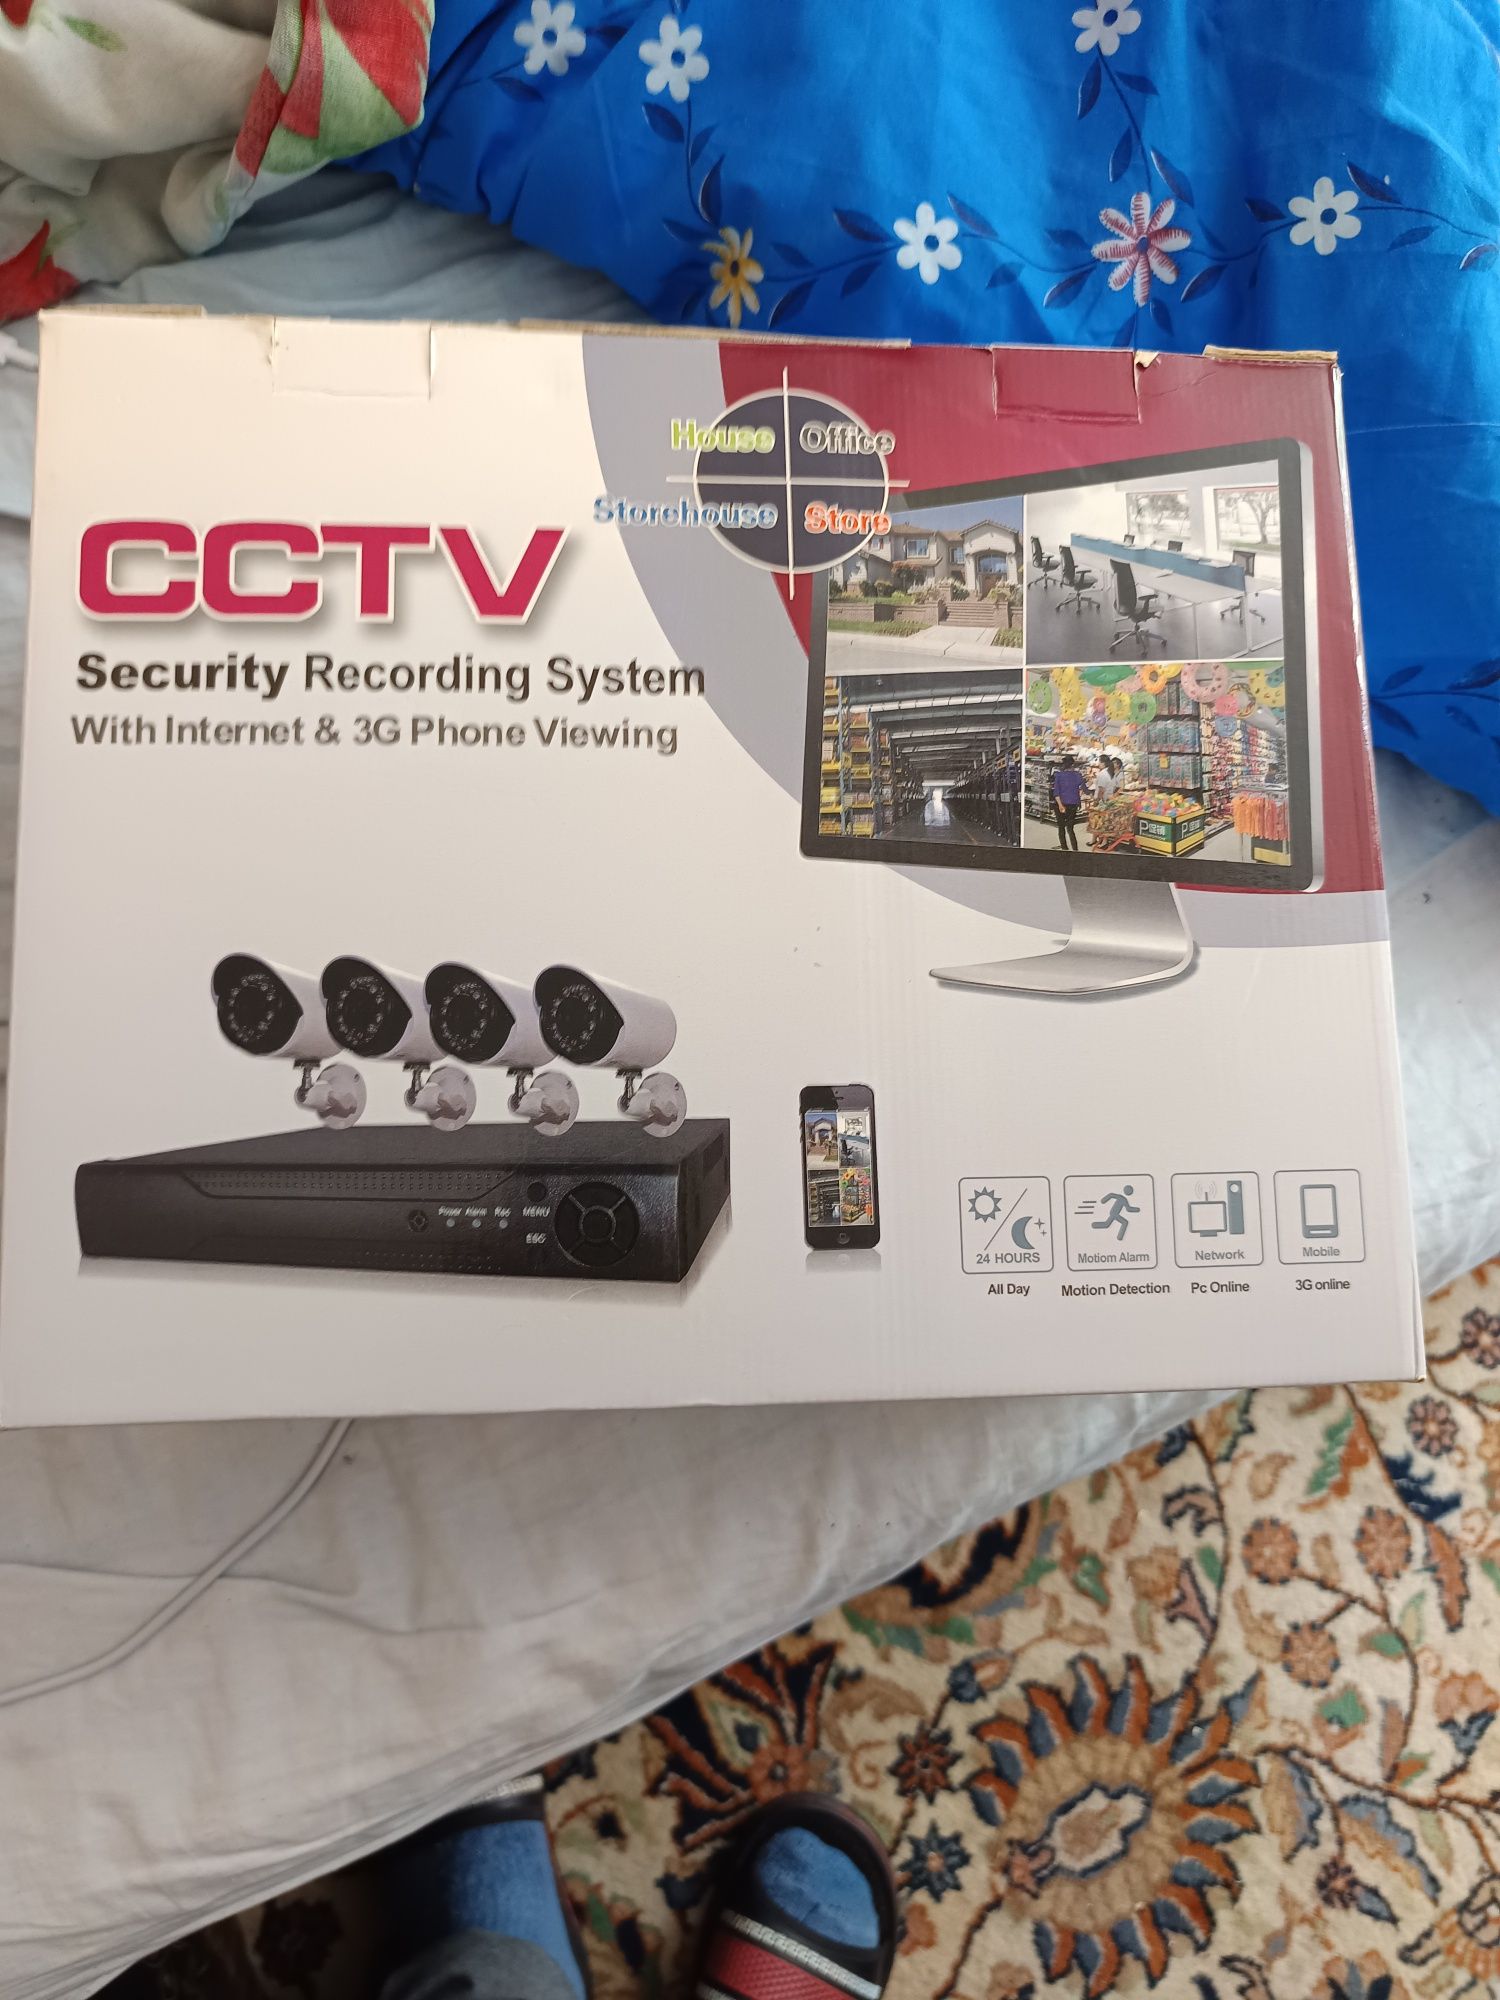 CCTV security recording system